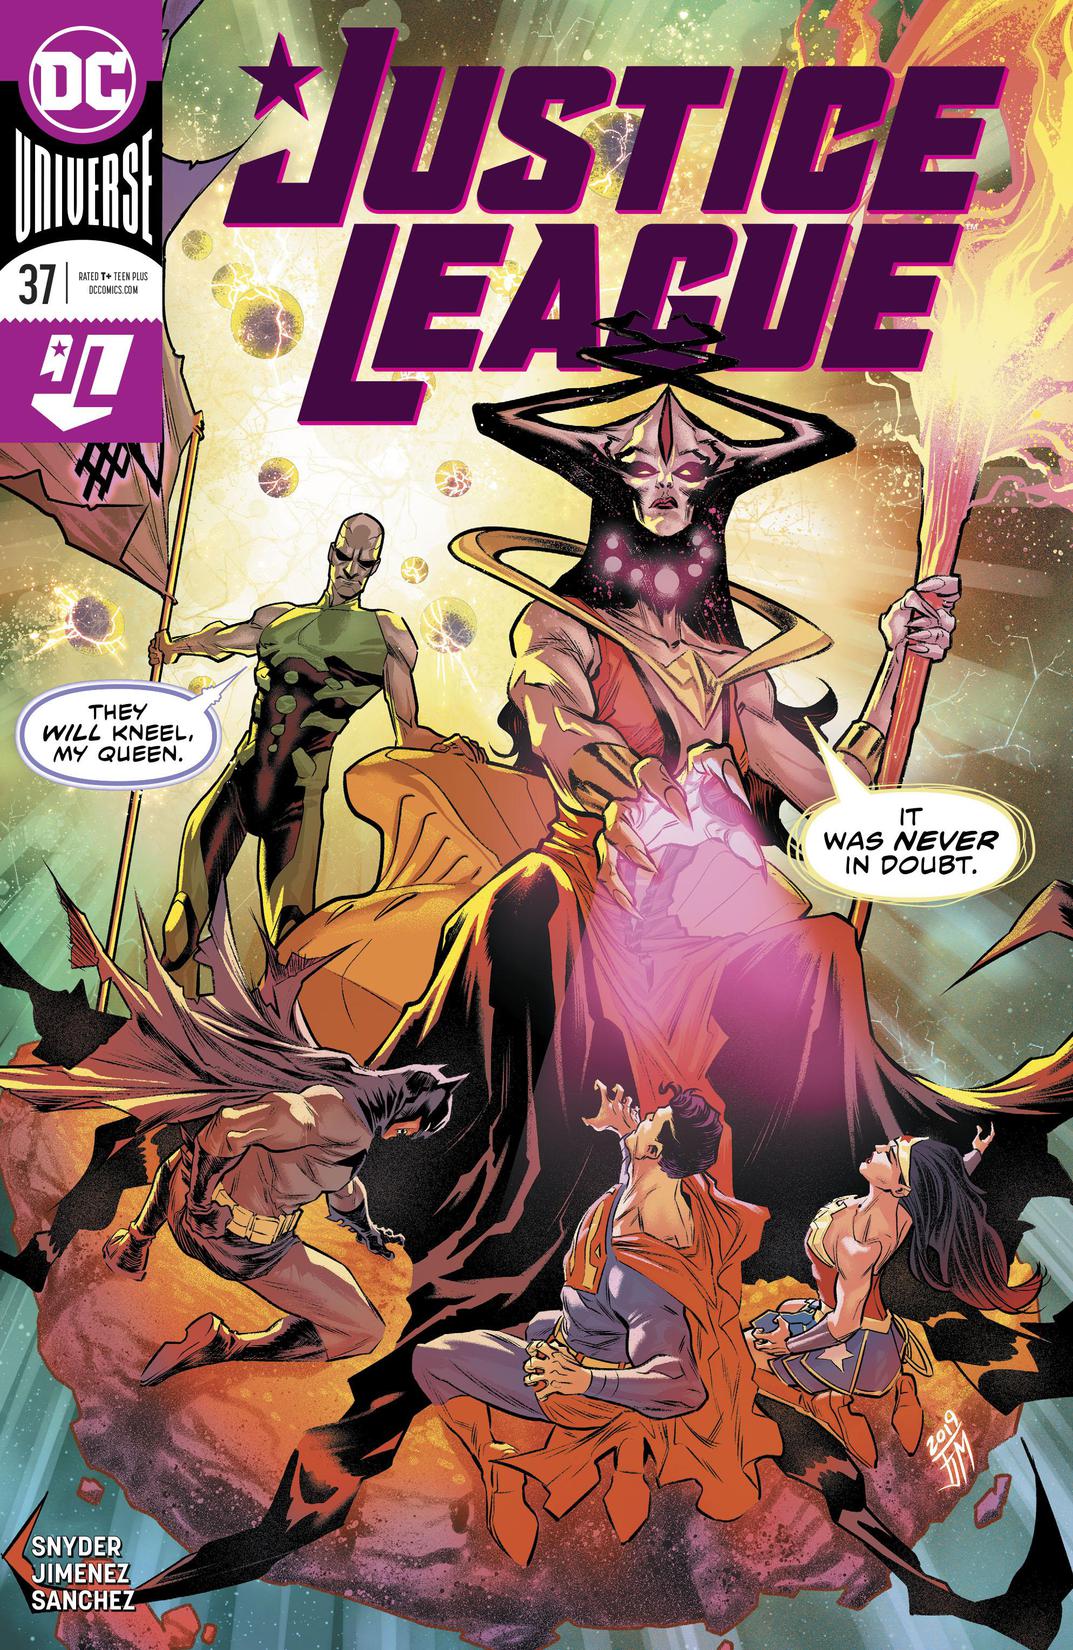 Justice League (2018-) #37 preview images